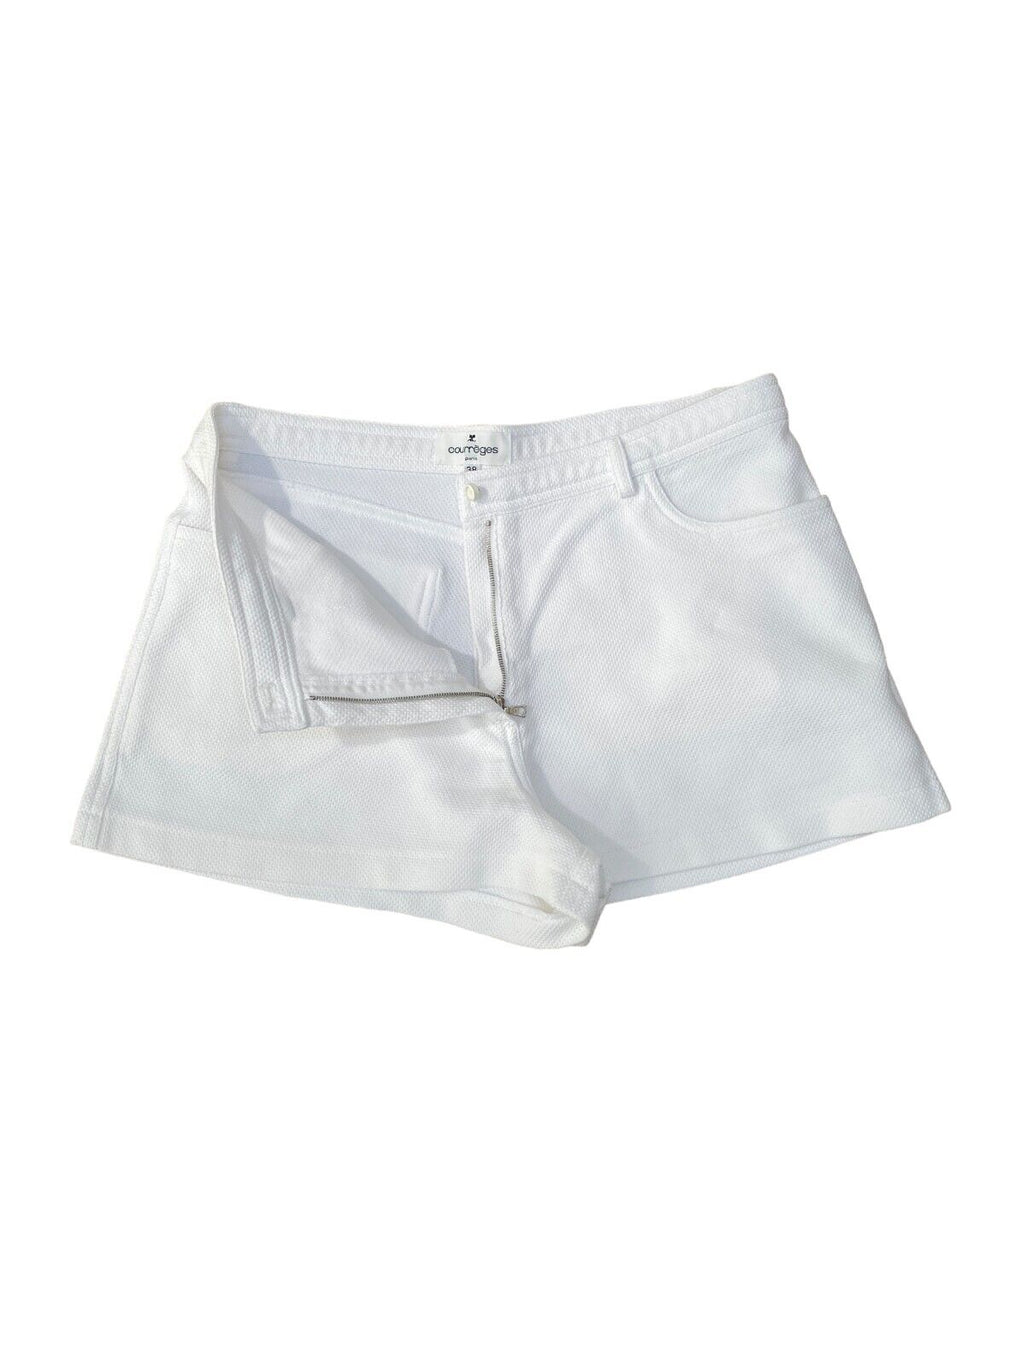 Vintage Heritage White Cotton Shorts